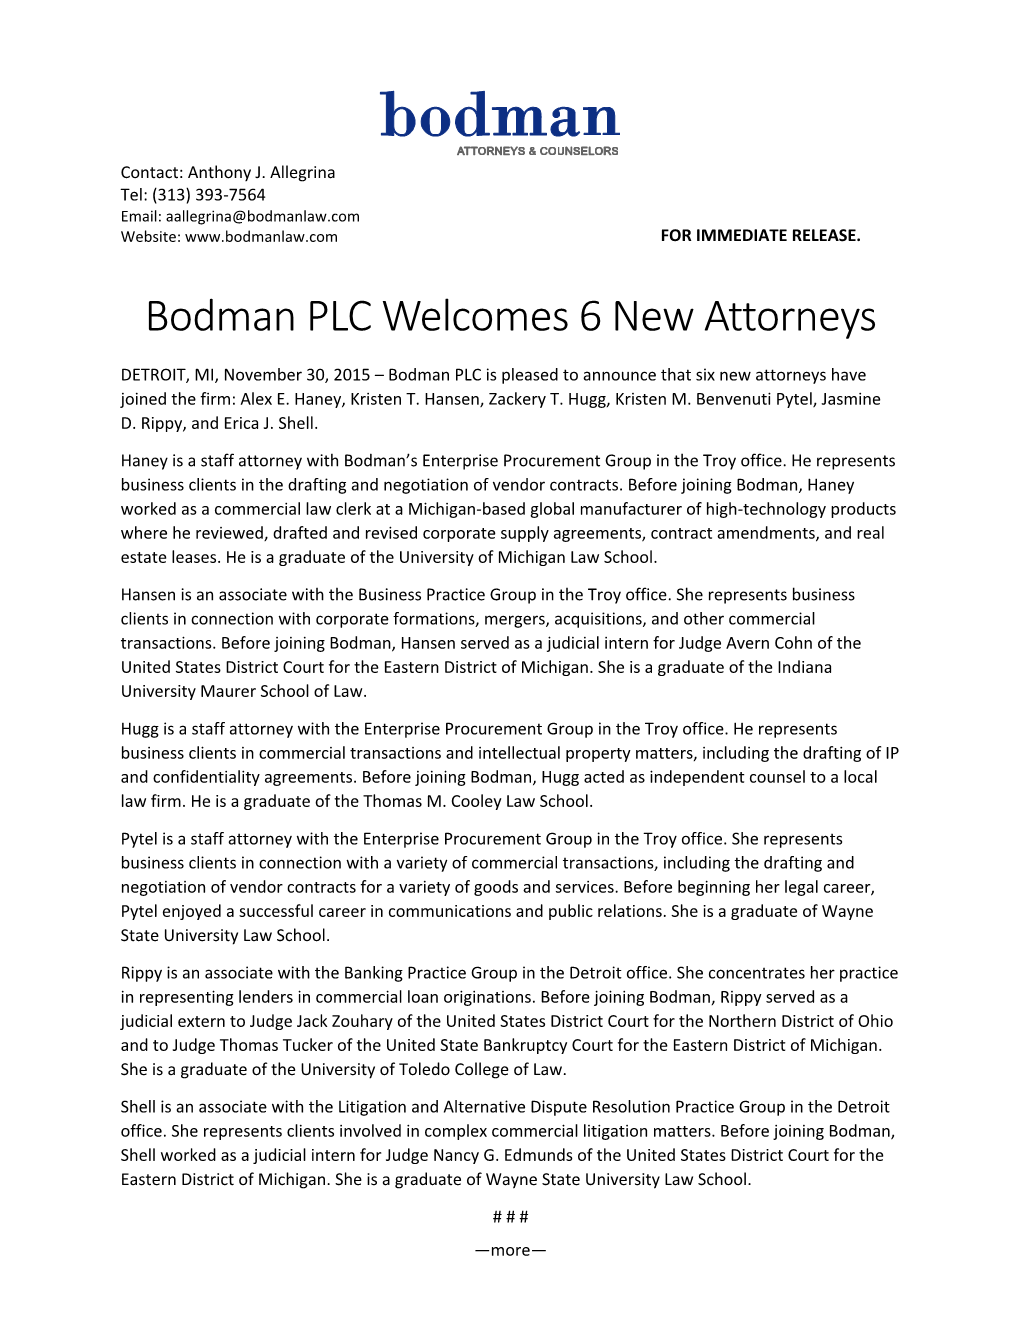 Bodman PLC Welcomes Six New Attorneys